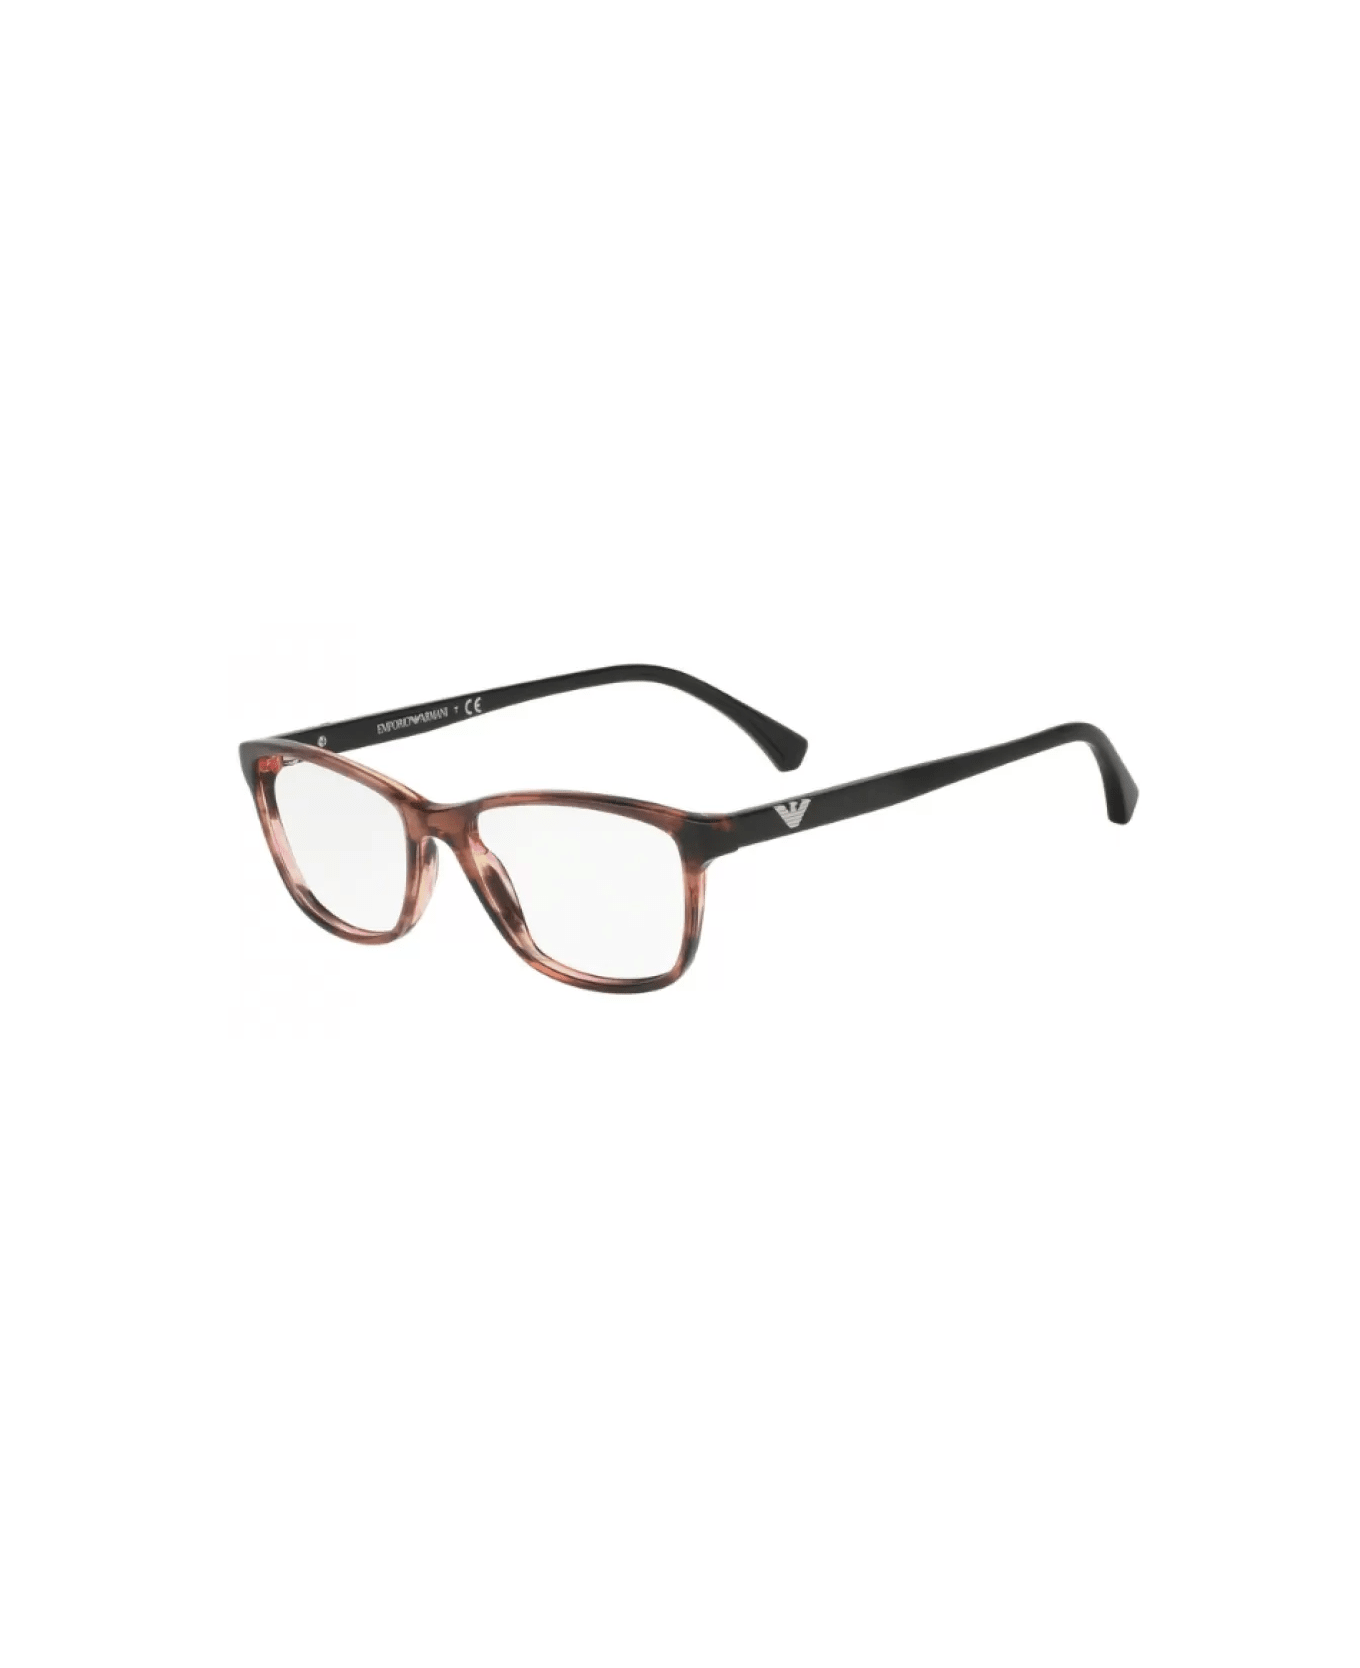 Emporio Armani EA3099 5553 Glasses アイウェア